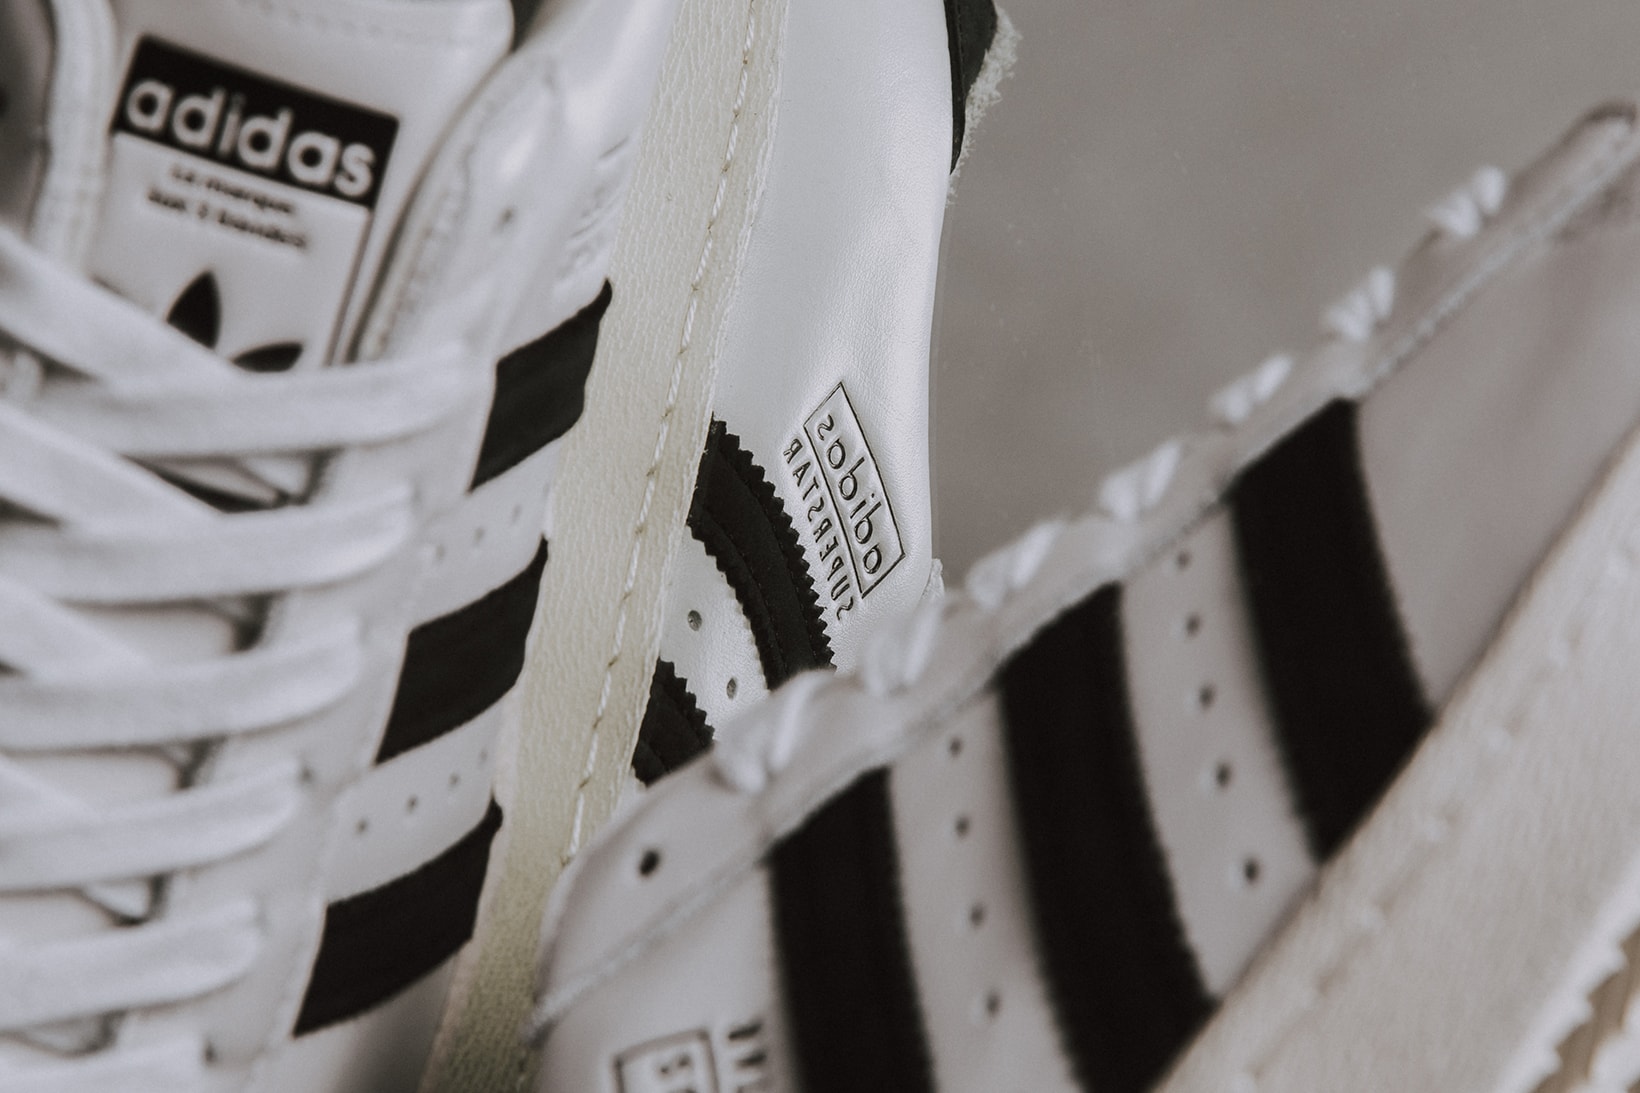 adidas superstar 80s recon sneakers white black shoes footwear sneakerhead